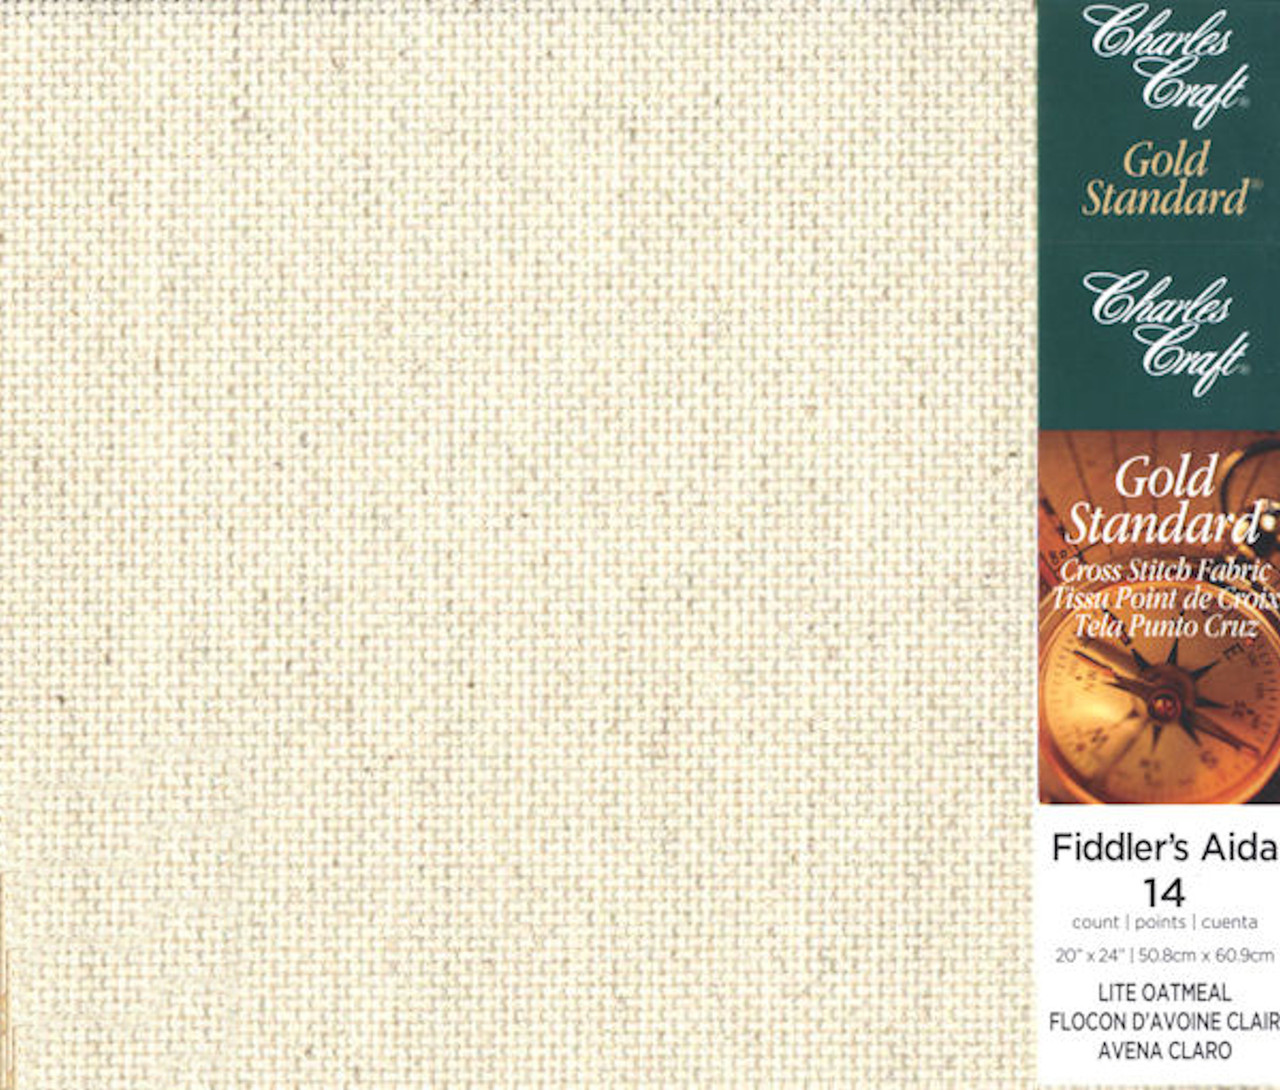 Charles Craft Gold Standard Fiddler's Cloth 14 Count 20x24 Light Oatmeal